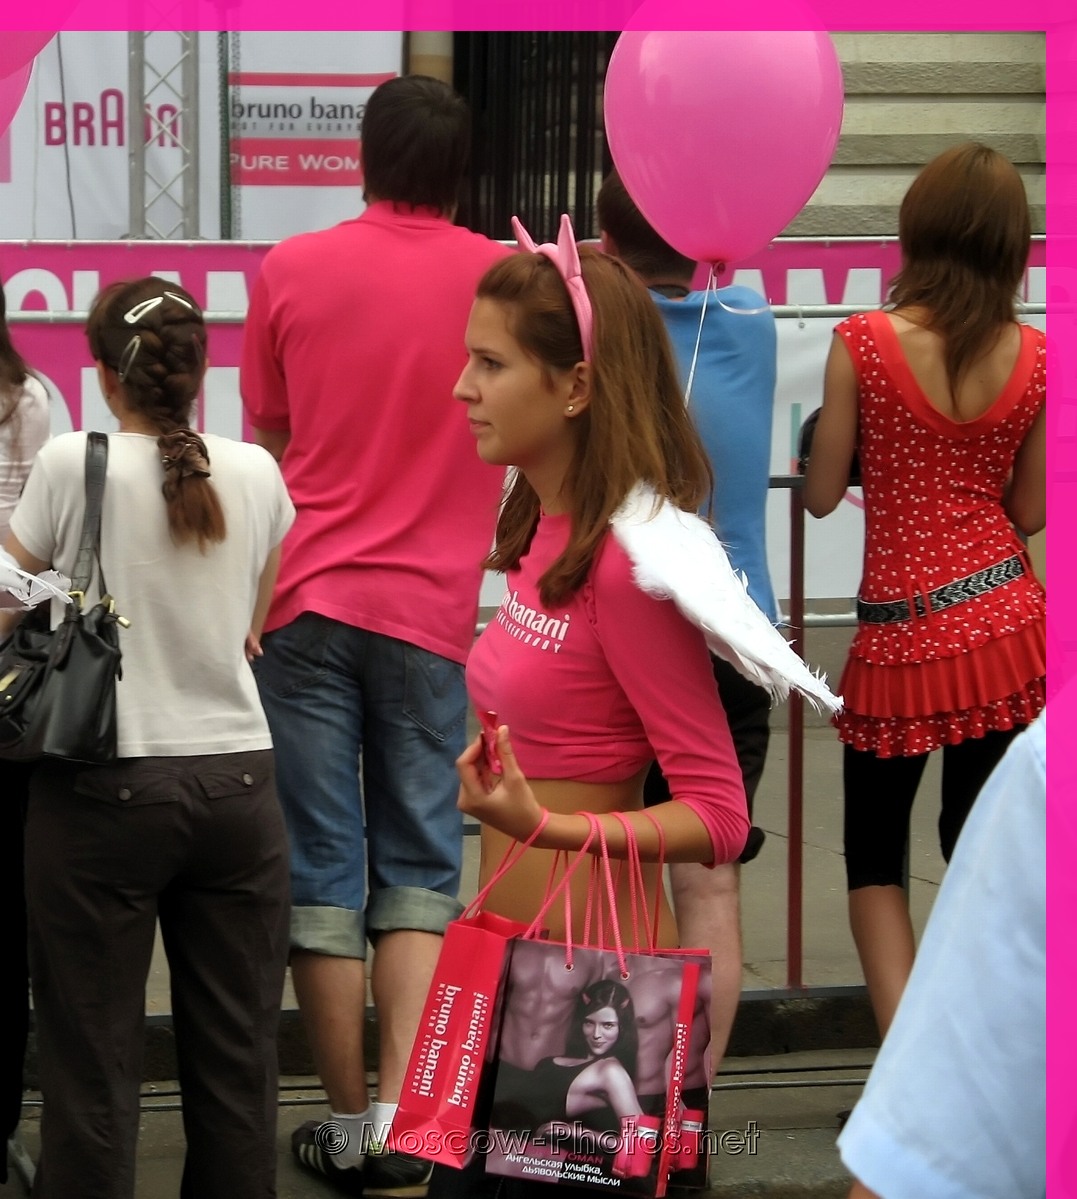 Bruno Banani Girl In Pink 